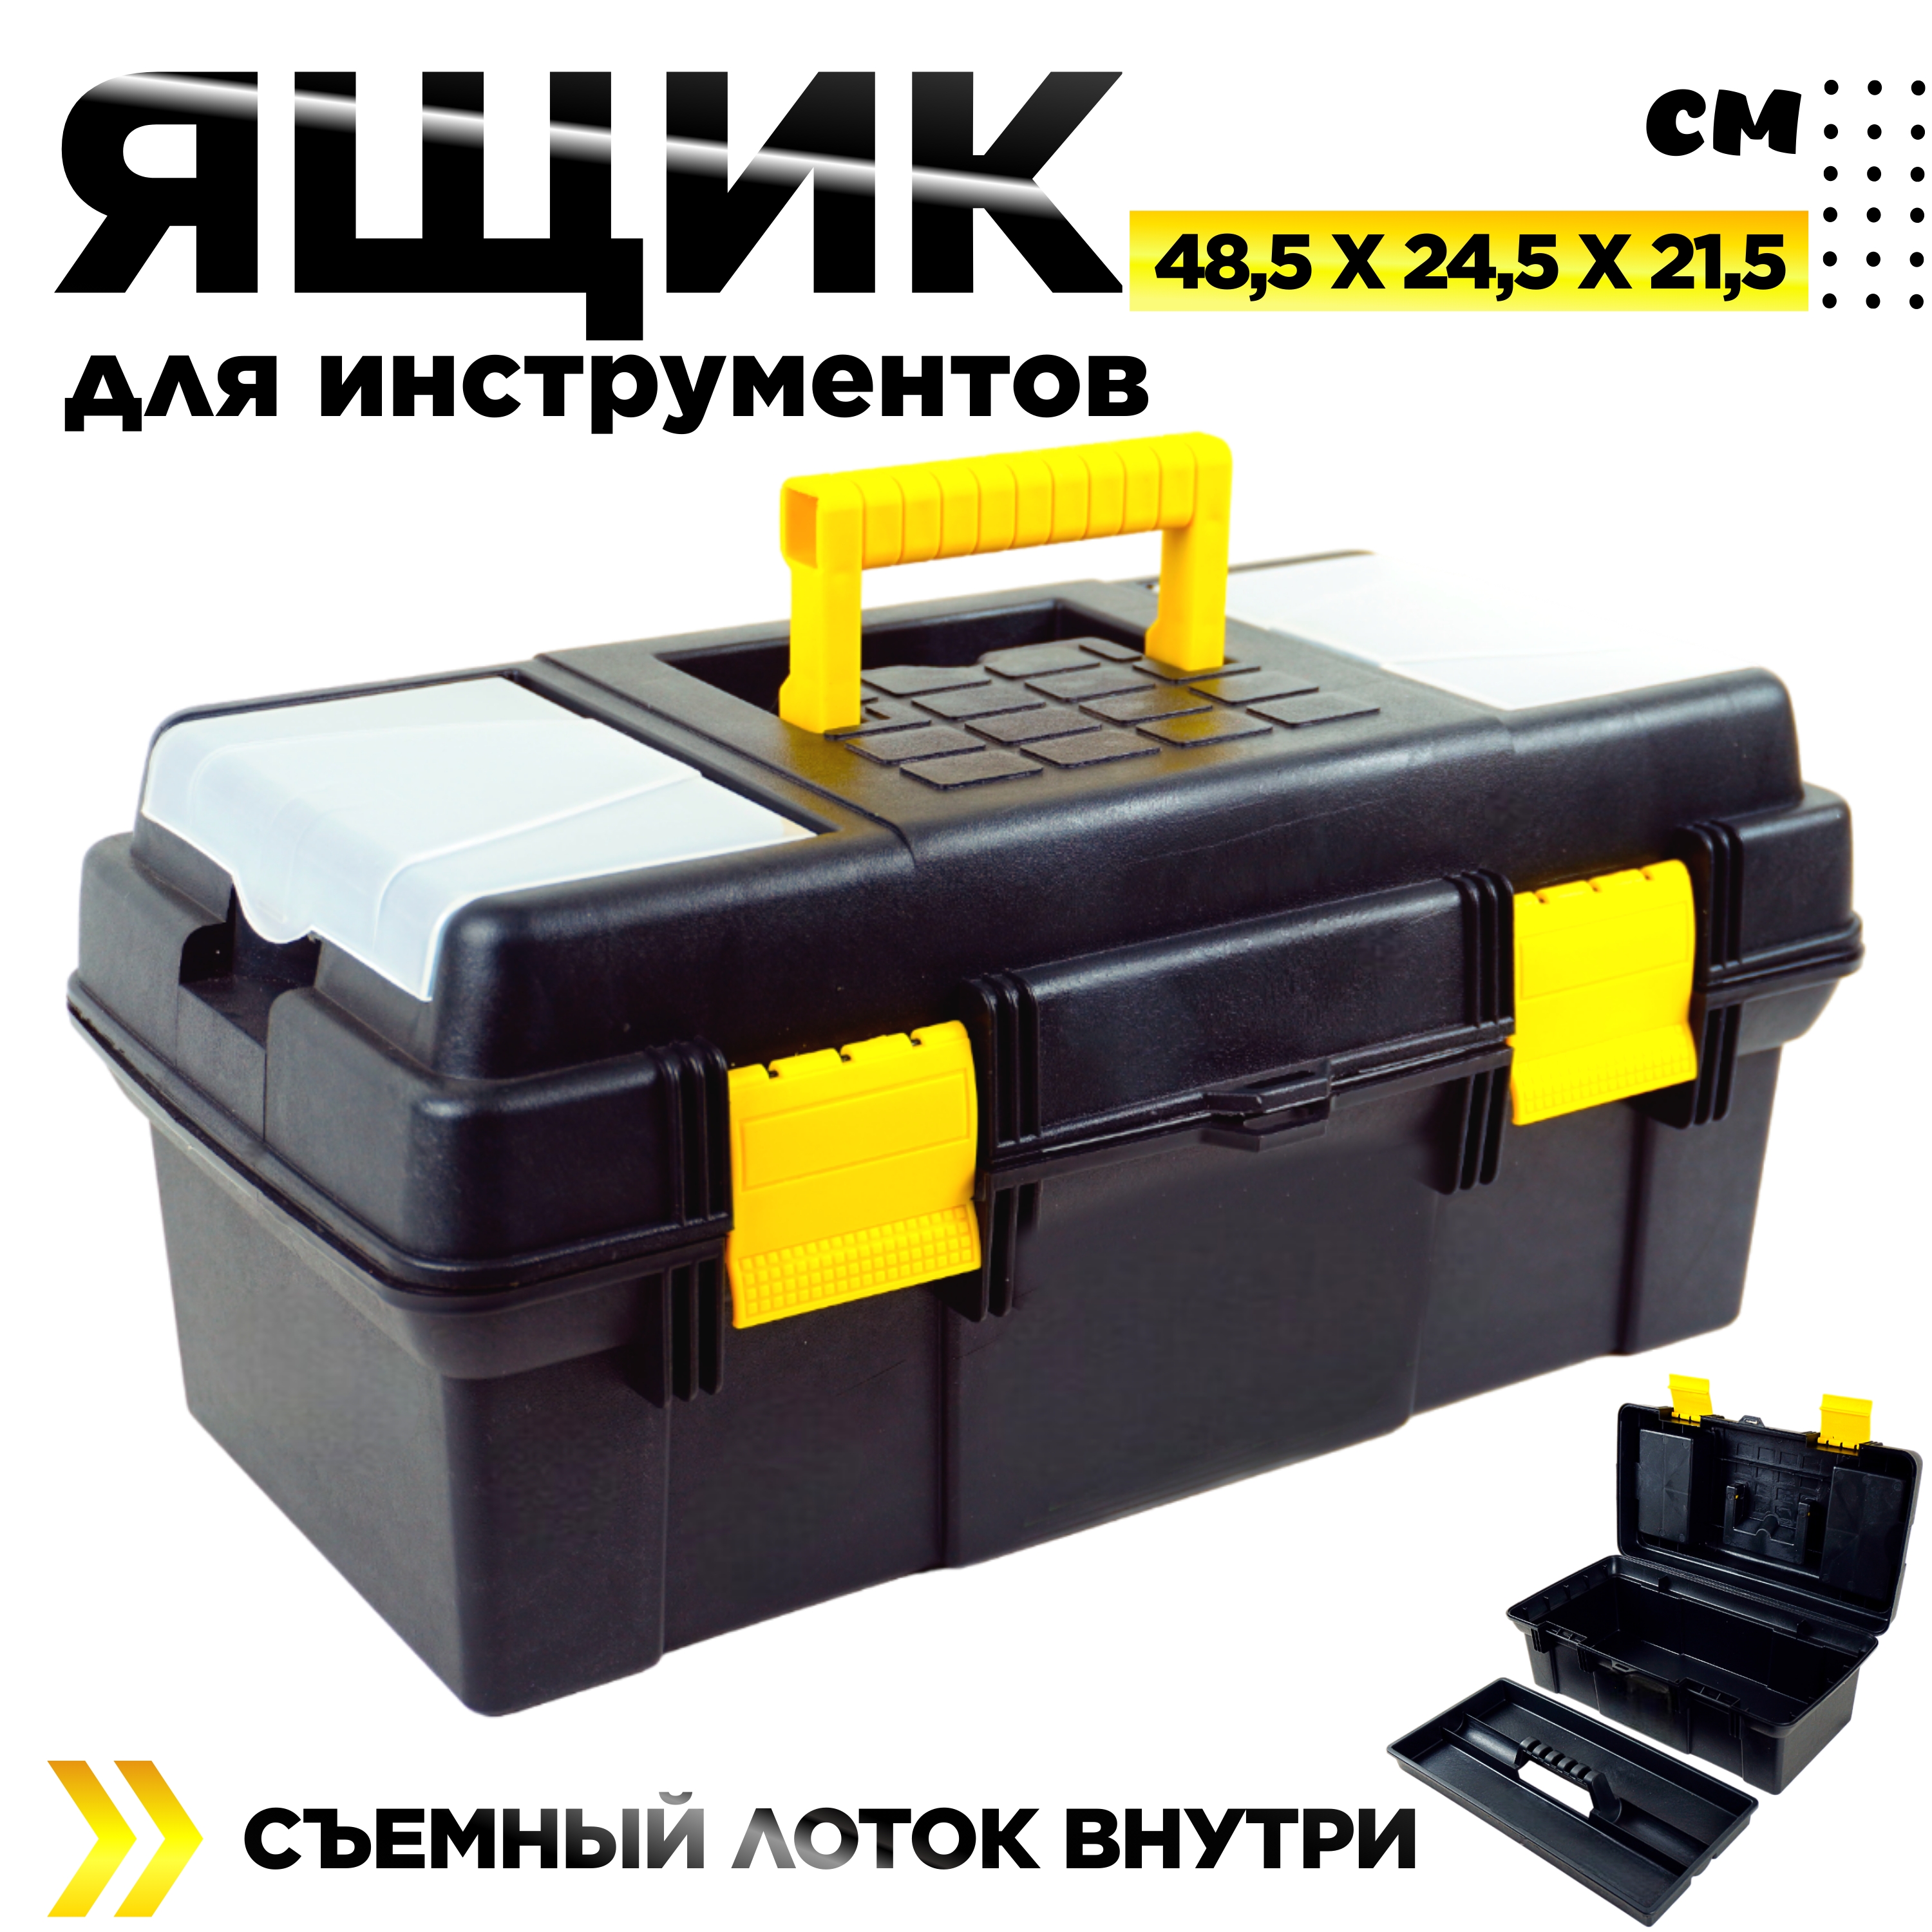 Ящик для инструментов Дельта Мастер 19 дюймов 485 х 245 х 215 мм ящик для инструментов дельта эксперт 16 дюймов 410 х 220 х 195 мм